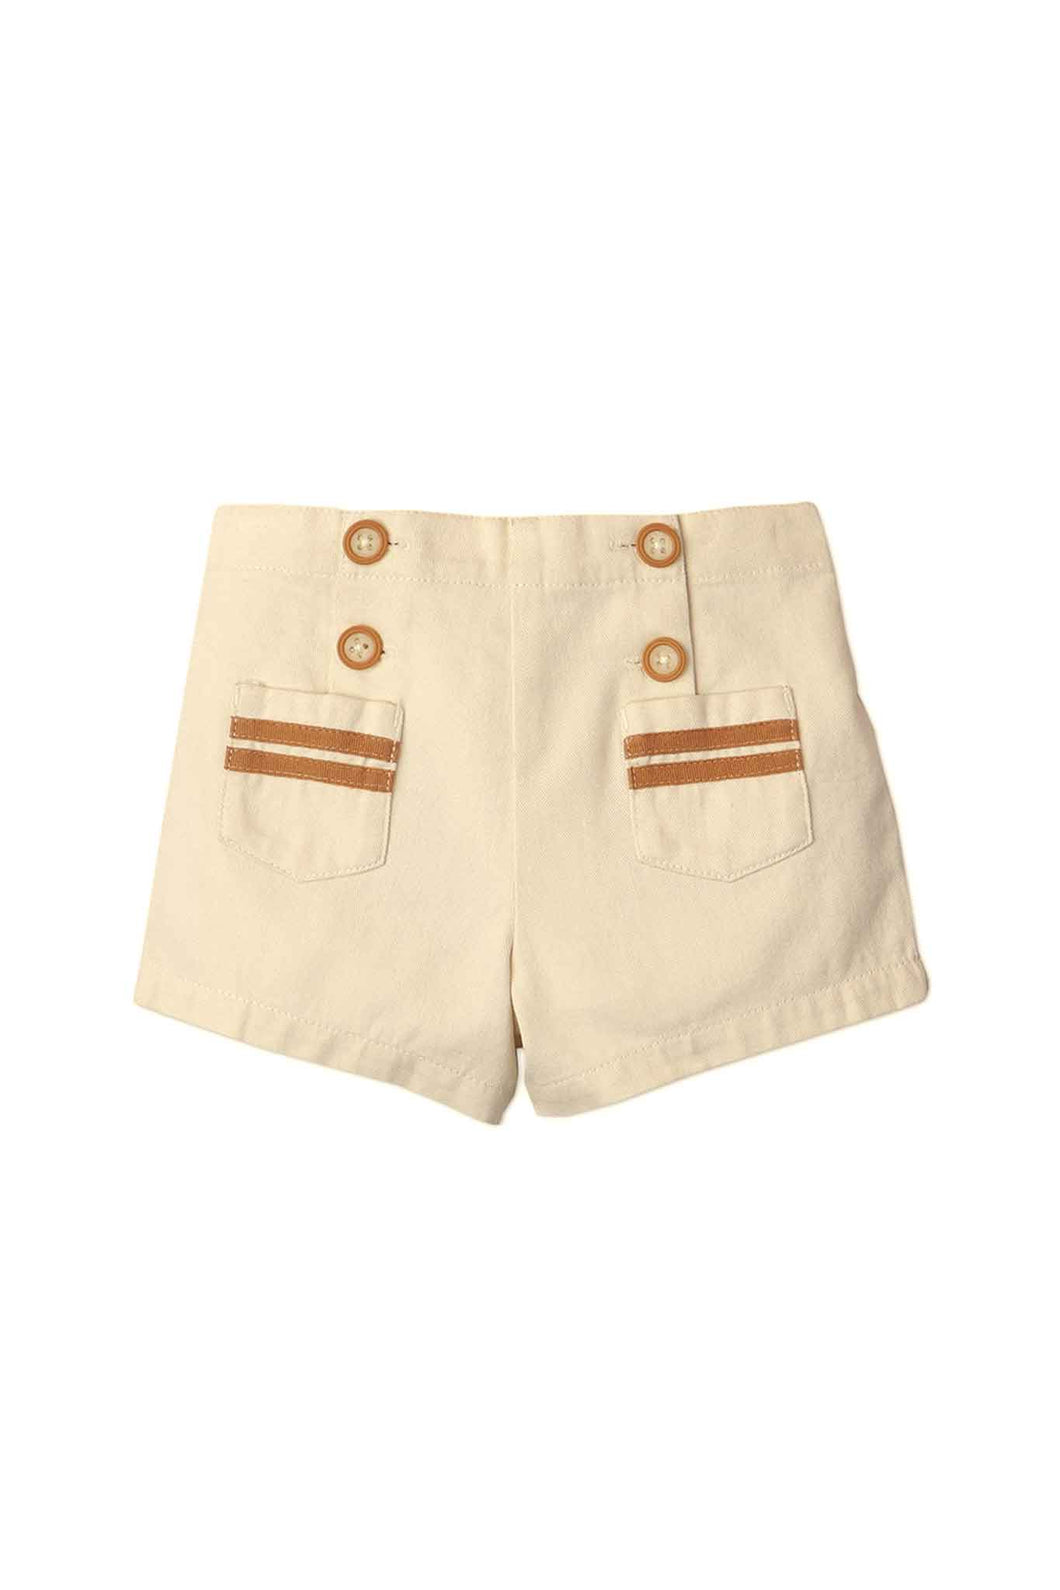 Gingersnaps Sailor Shorts with Pockets